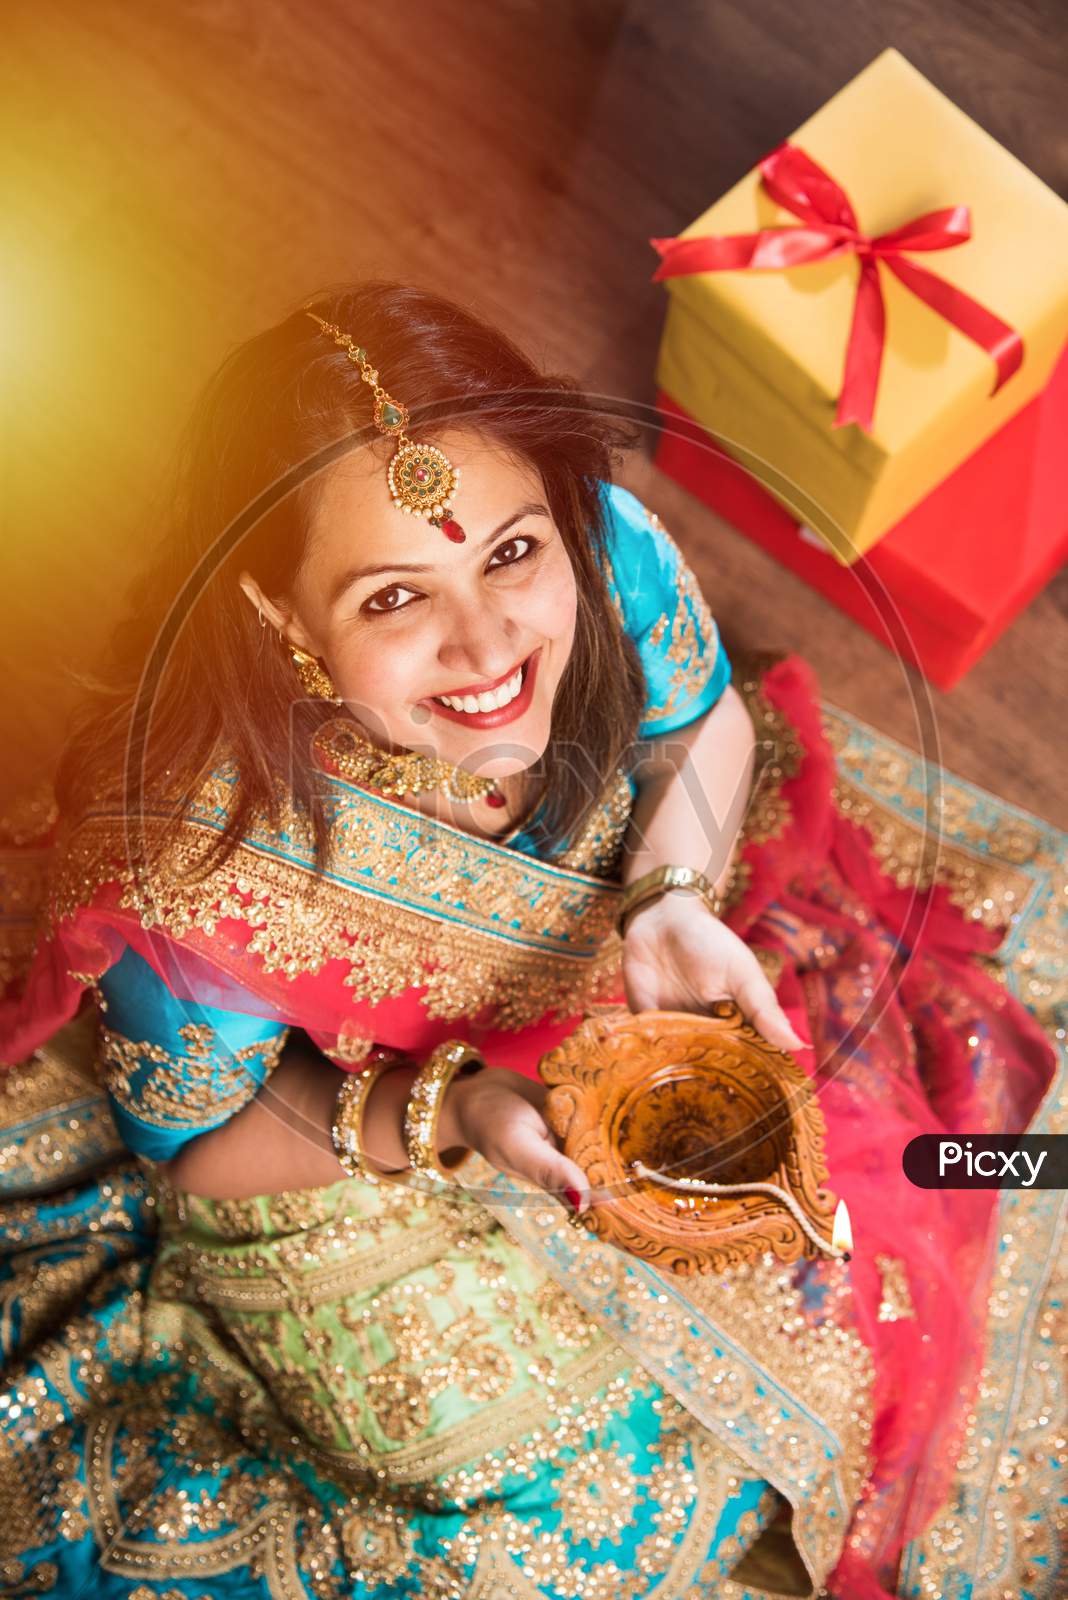 beautiful indian girl holding diya on diwali festival night, top view.selective focus